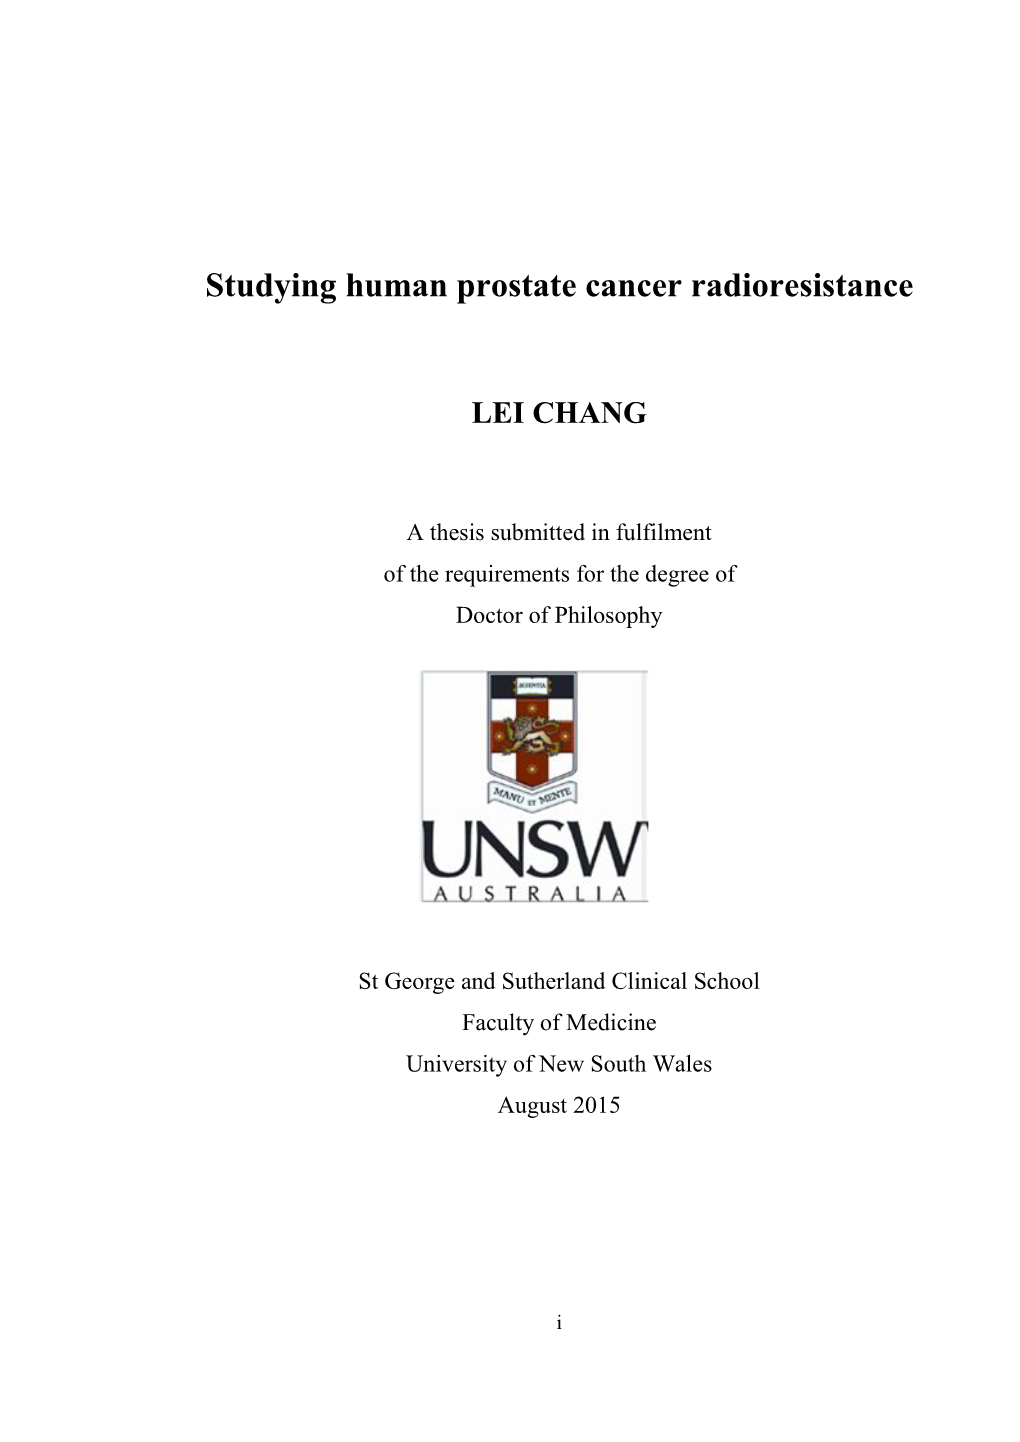 Studying Human Prostate Cancer Radioresistance